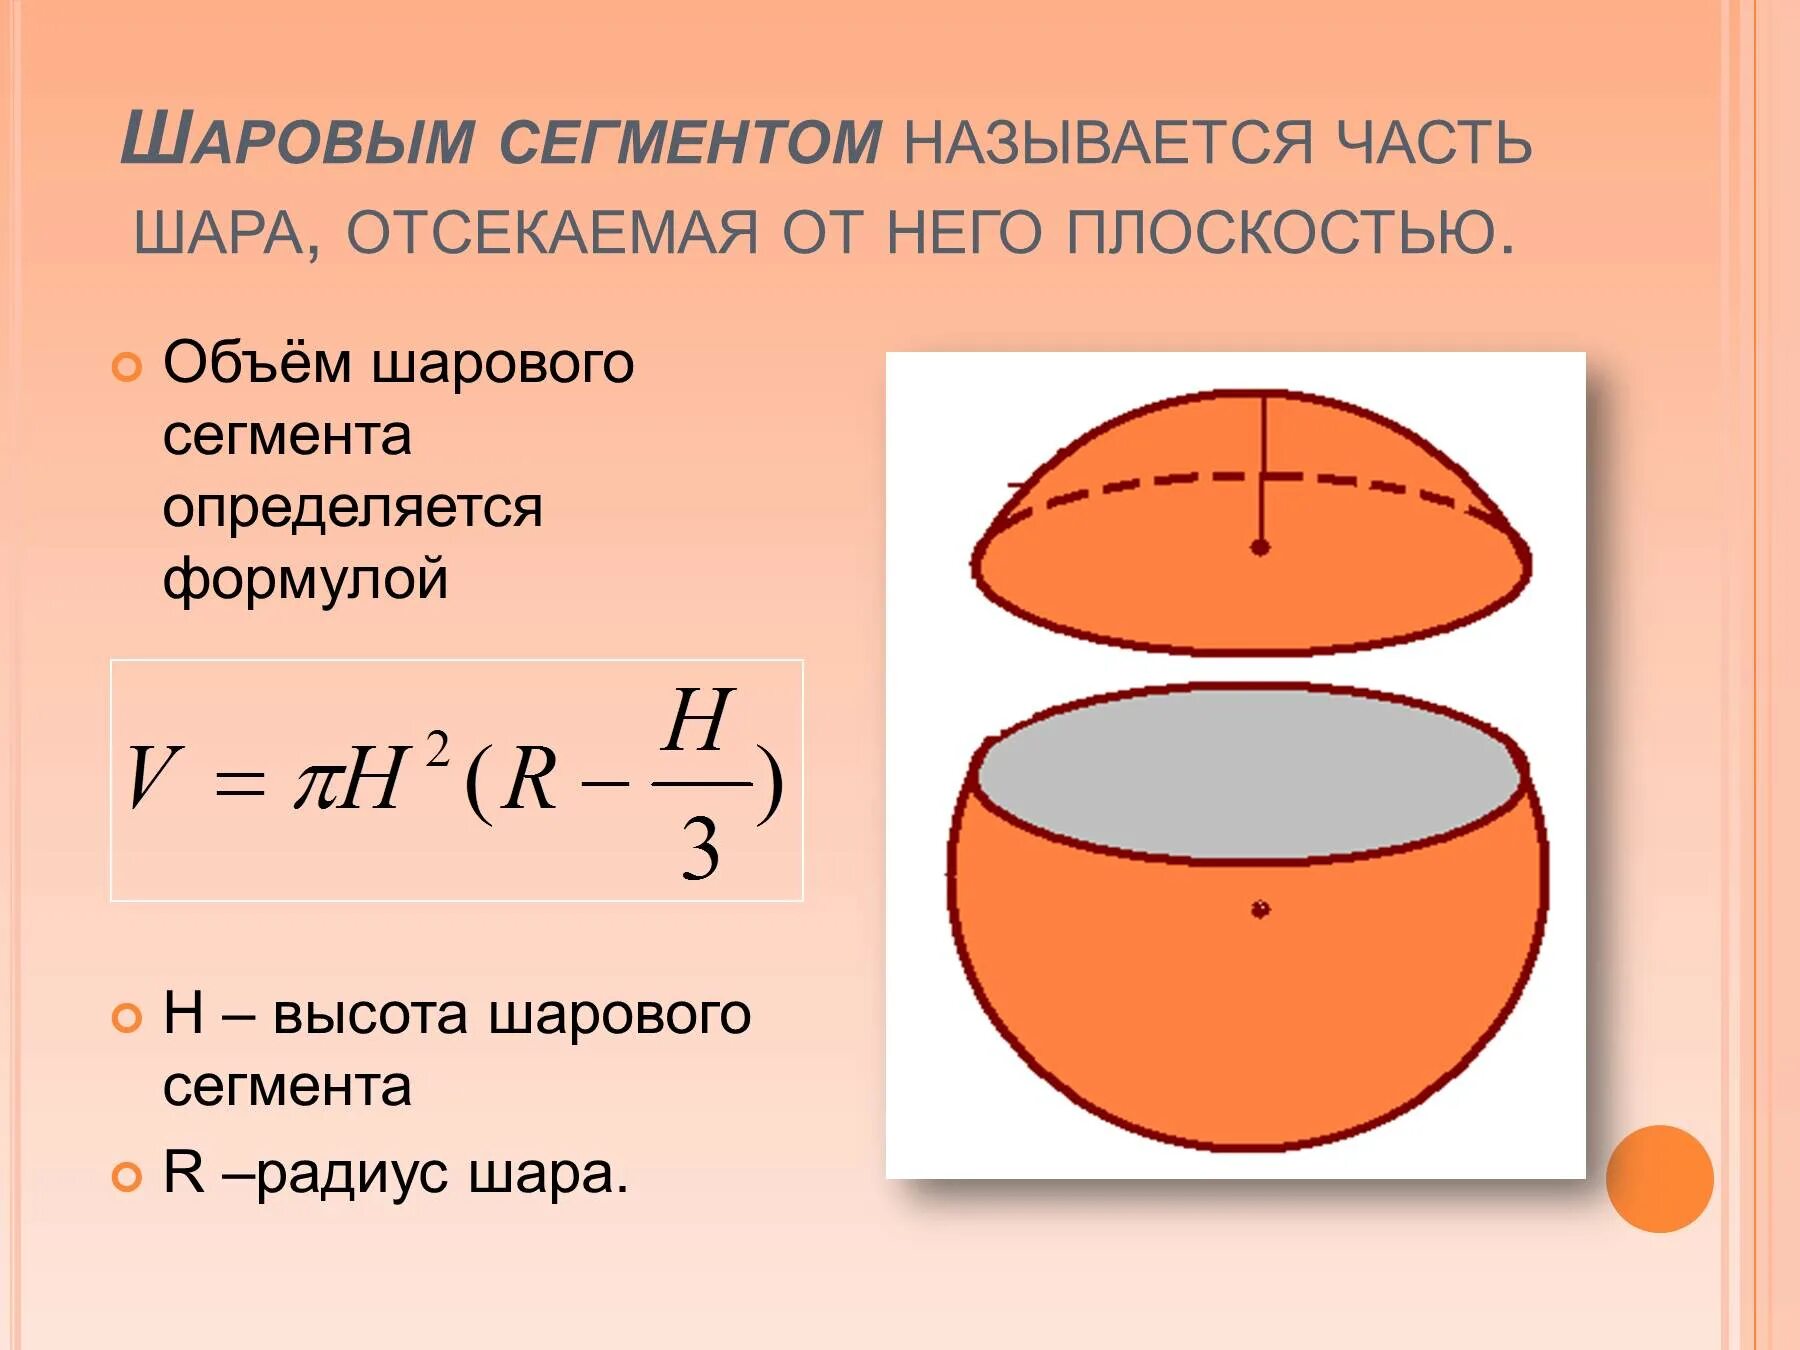 Формула шарового слоя. Формула объема части шара. Объём сегмента шара формула. Объем шарового сегмента формула. Объем шара и его частей формулы.